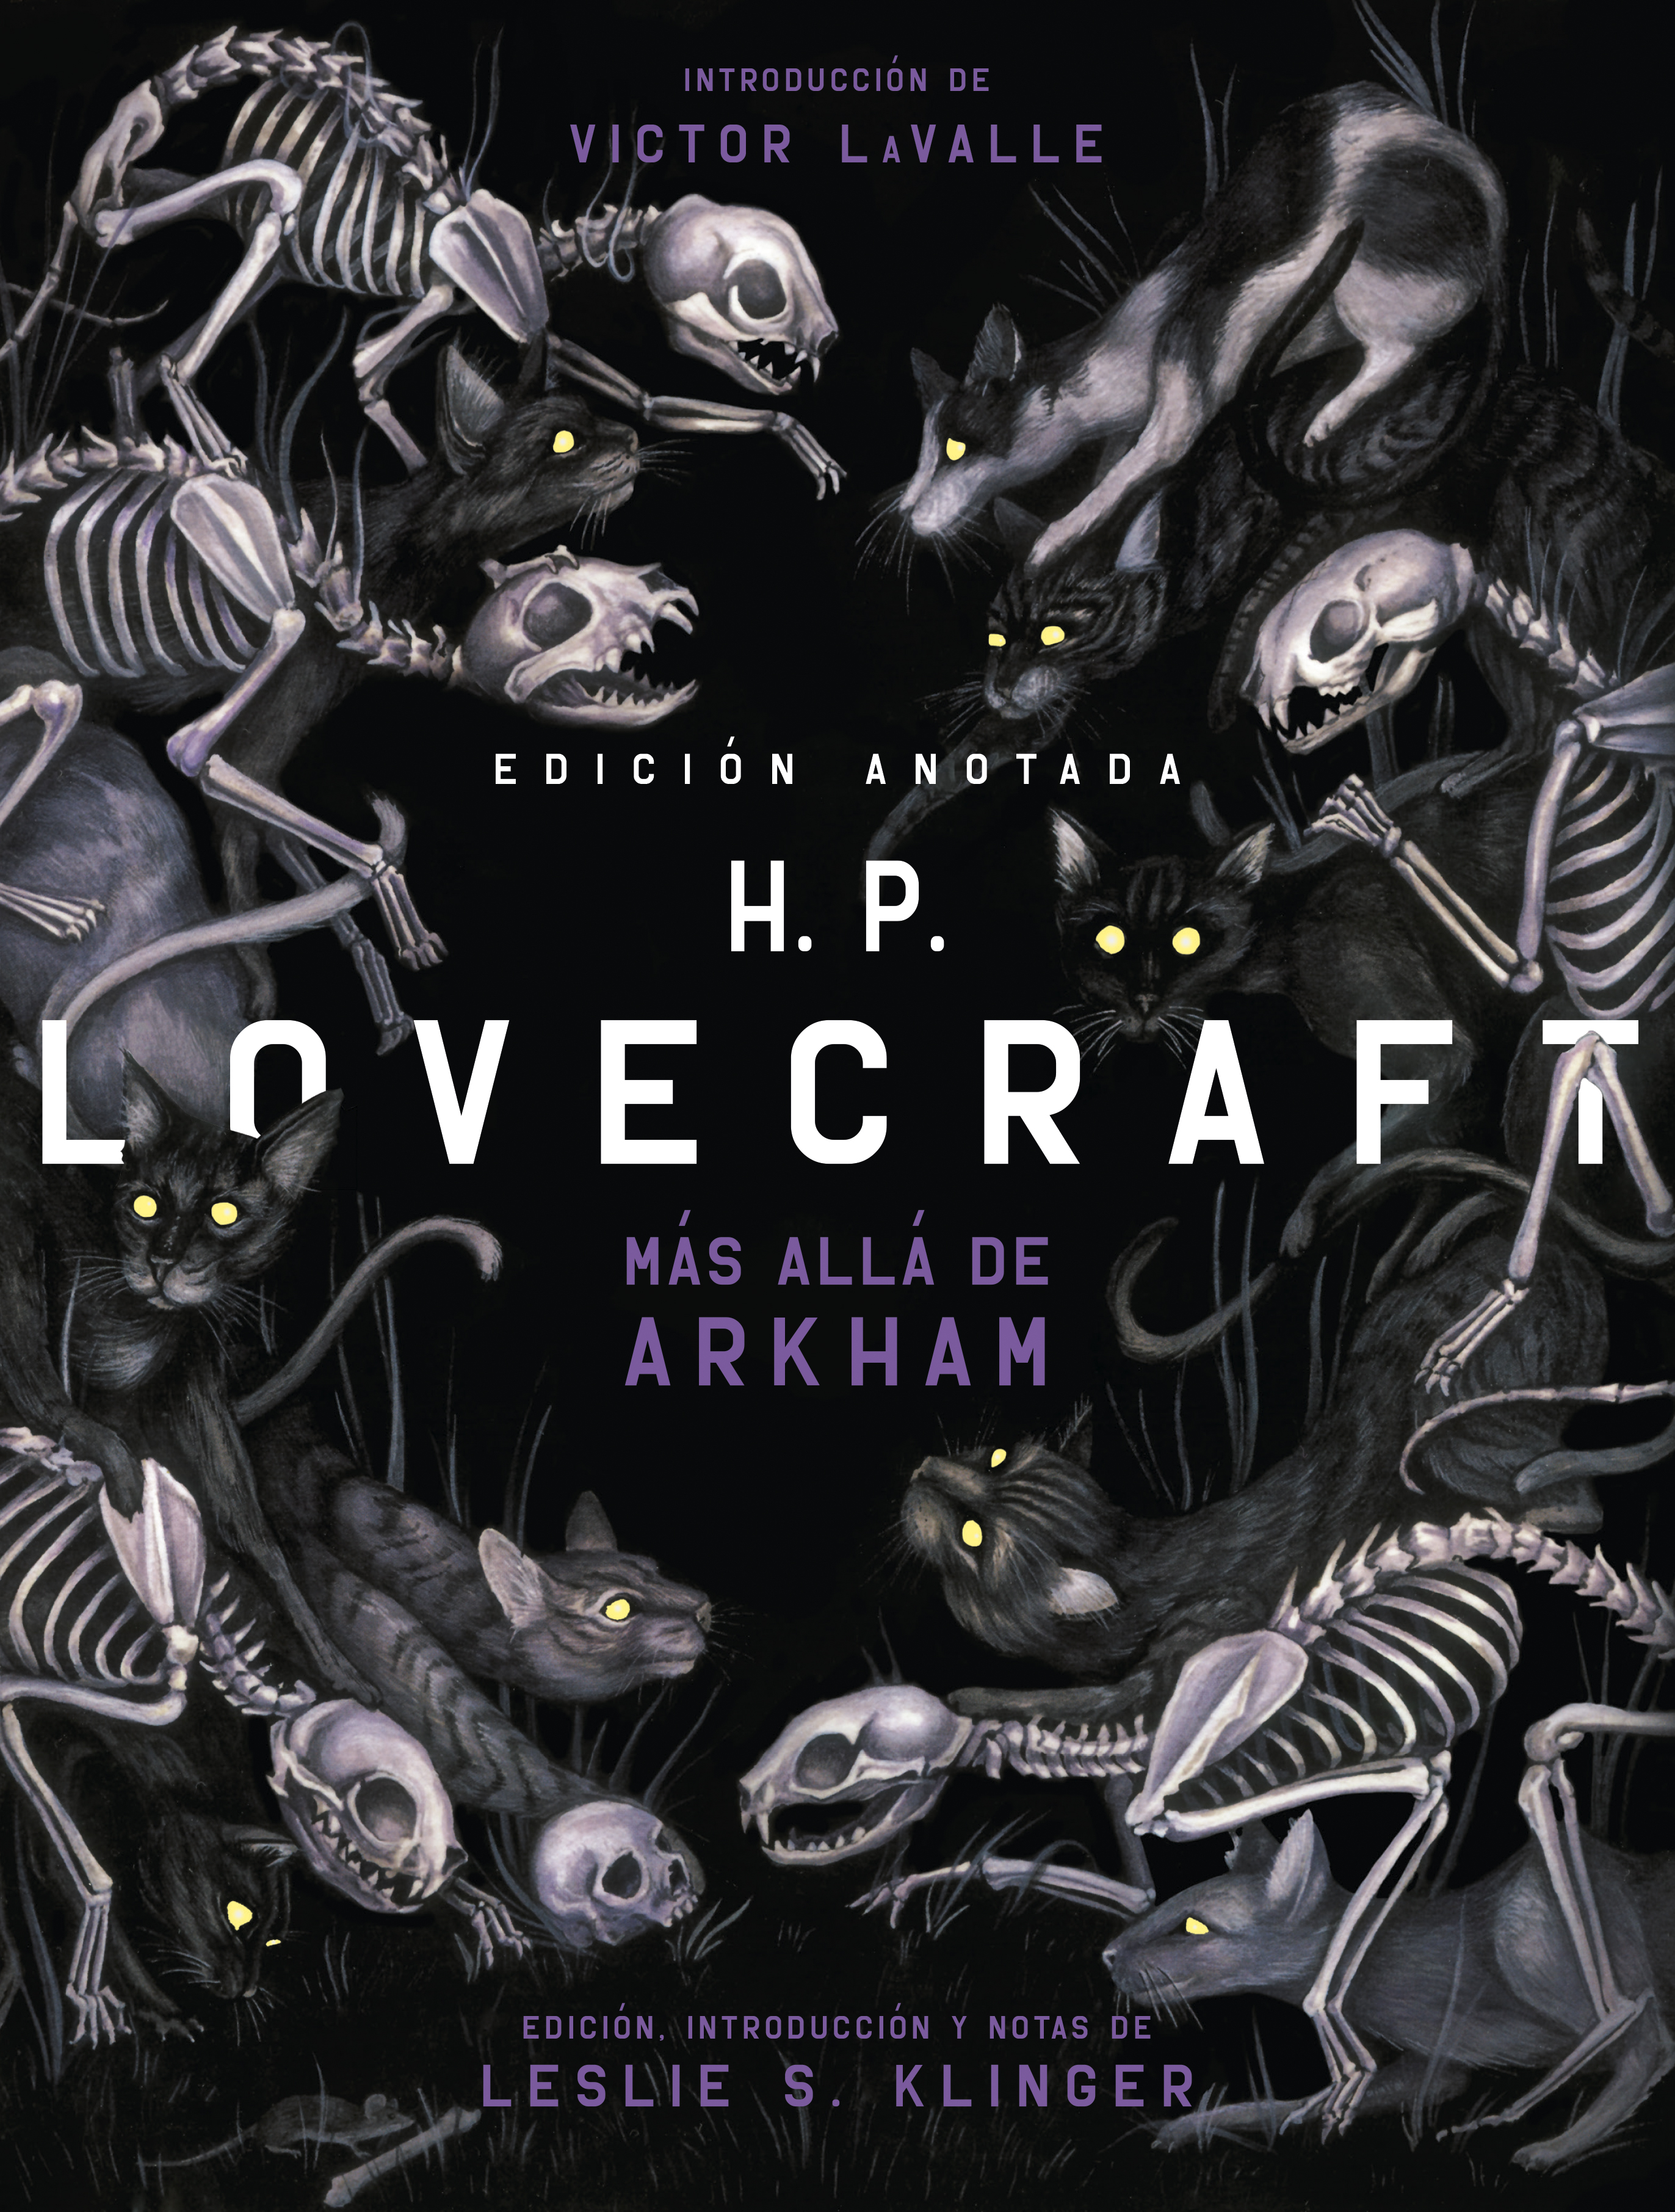 Victor LaValle, Alan Moore, Leslie S. Klinger, H. P. Lovecraft: H.P. Lovecraft (Español language, Akal)